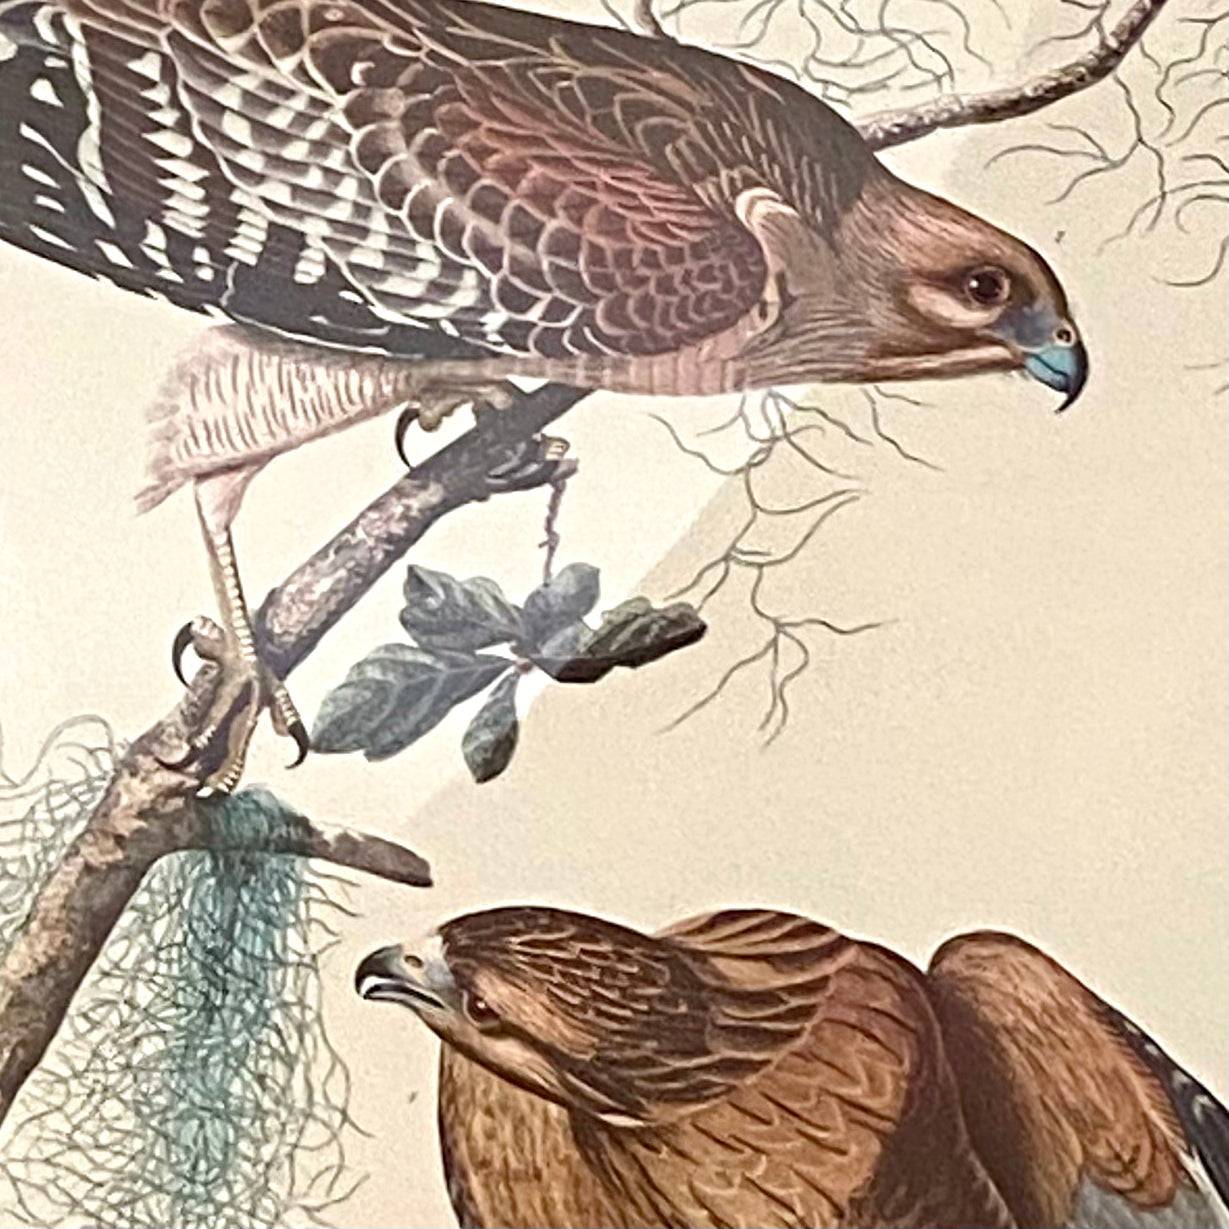 Impressive vintage Audubon bird color lithograph wall art of “ Red-shouldered Hawk”